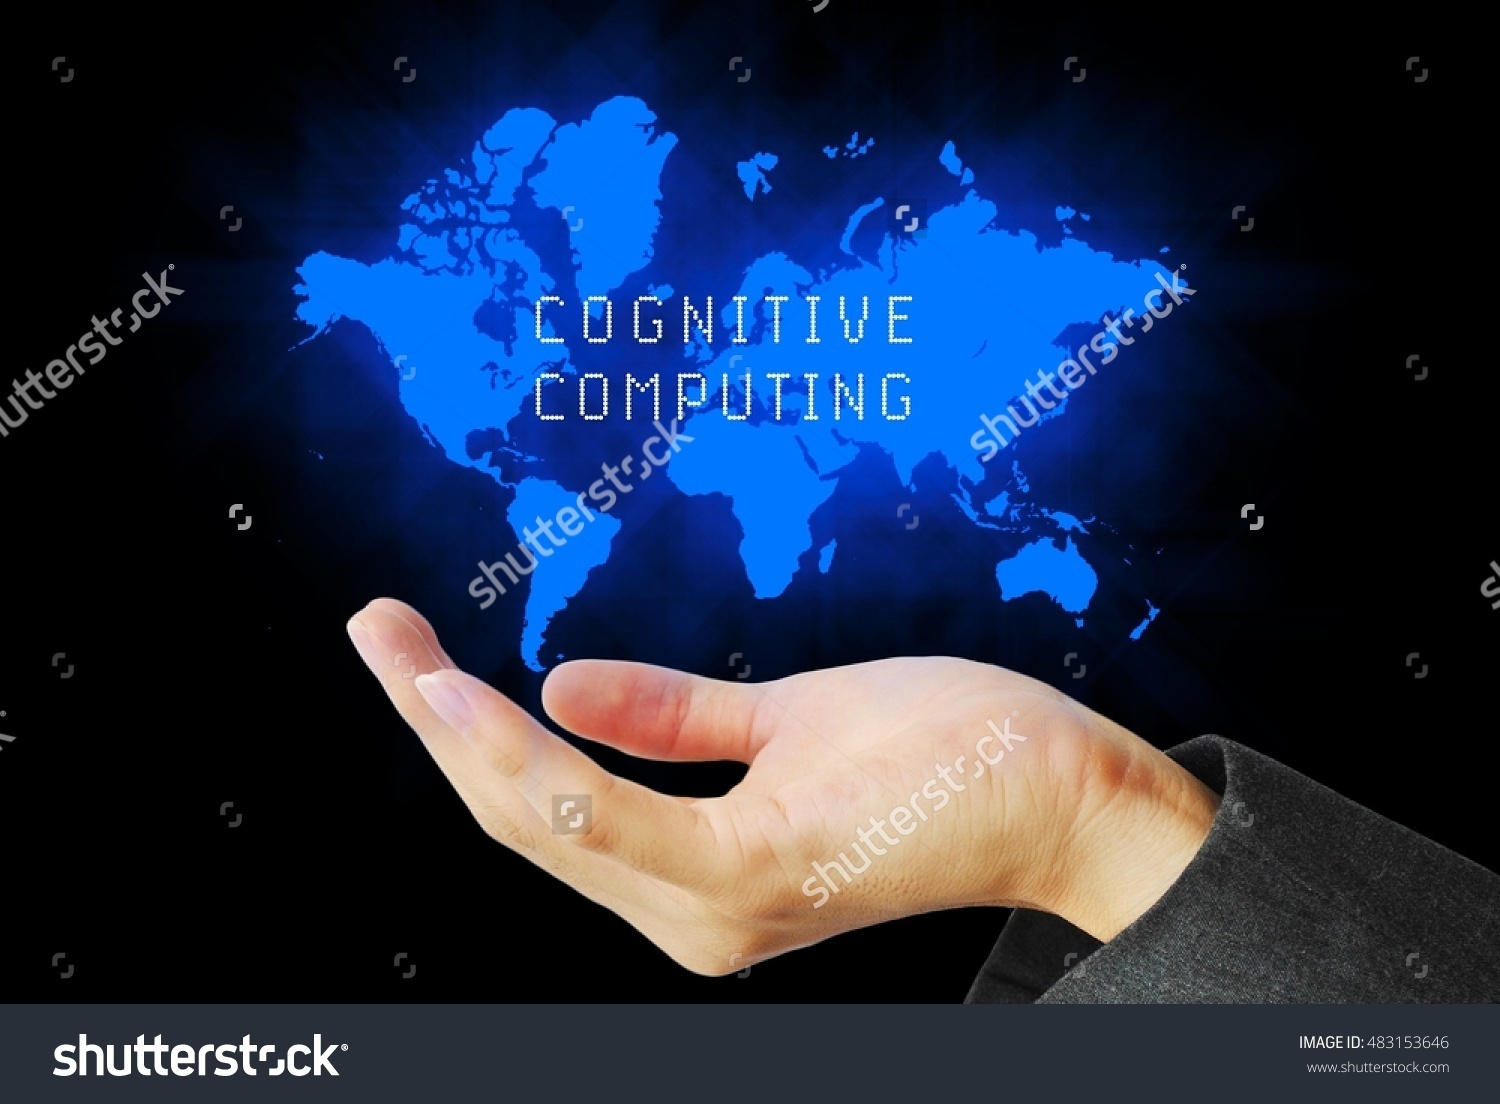 Cognitive computing